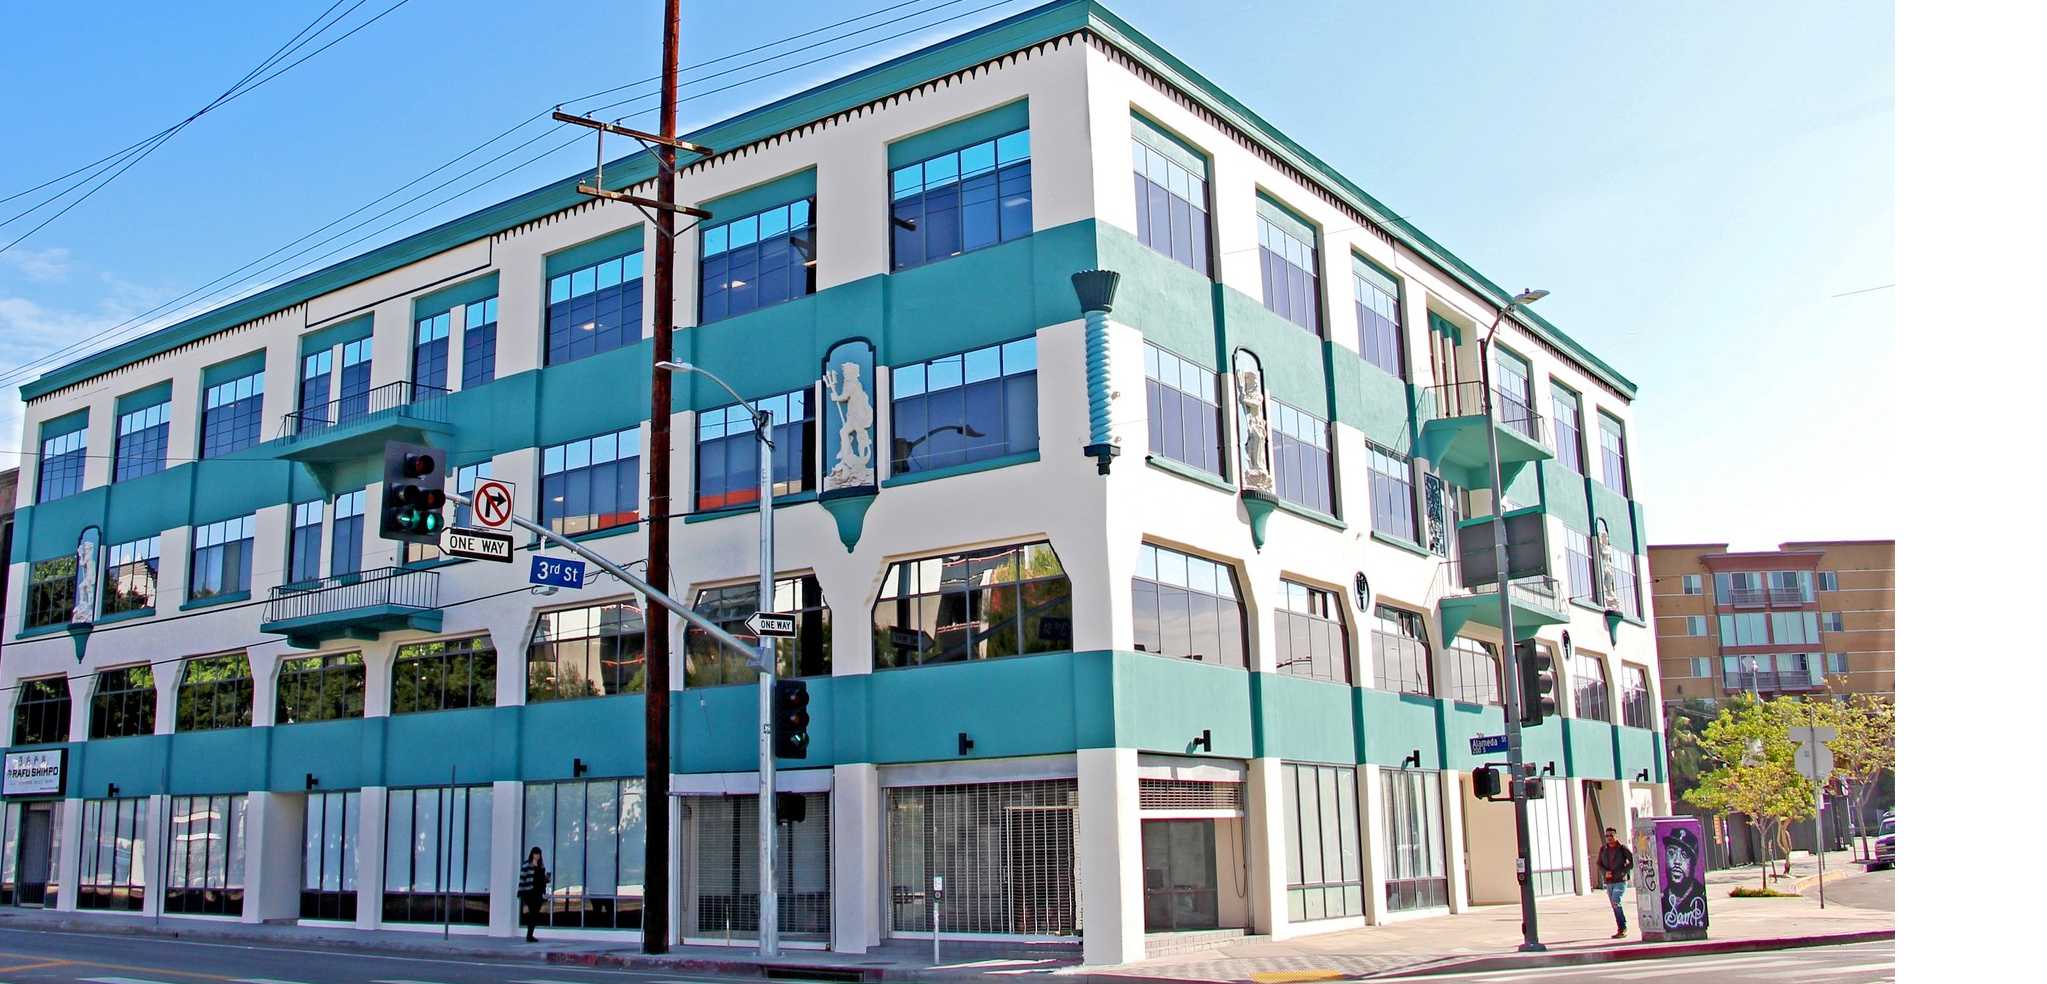 Los Angeles Community Design Center